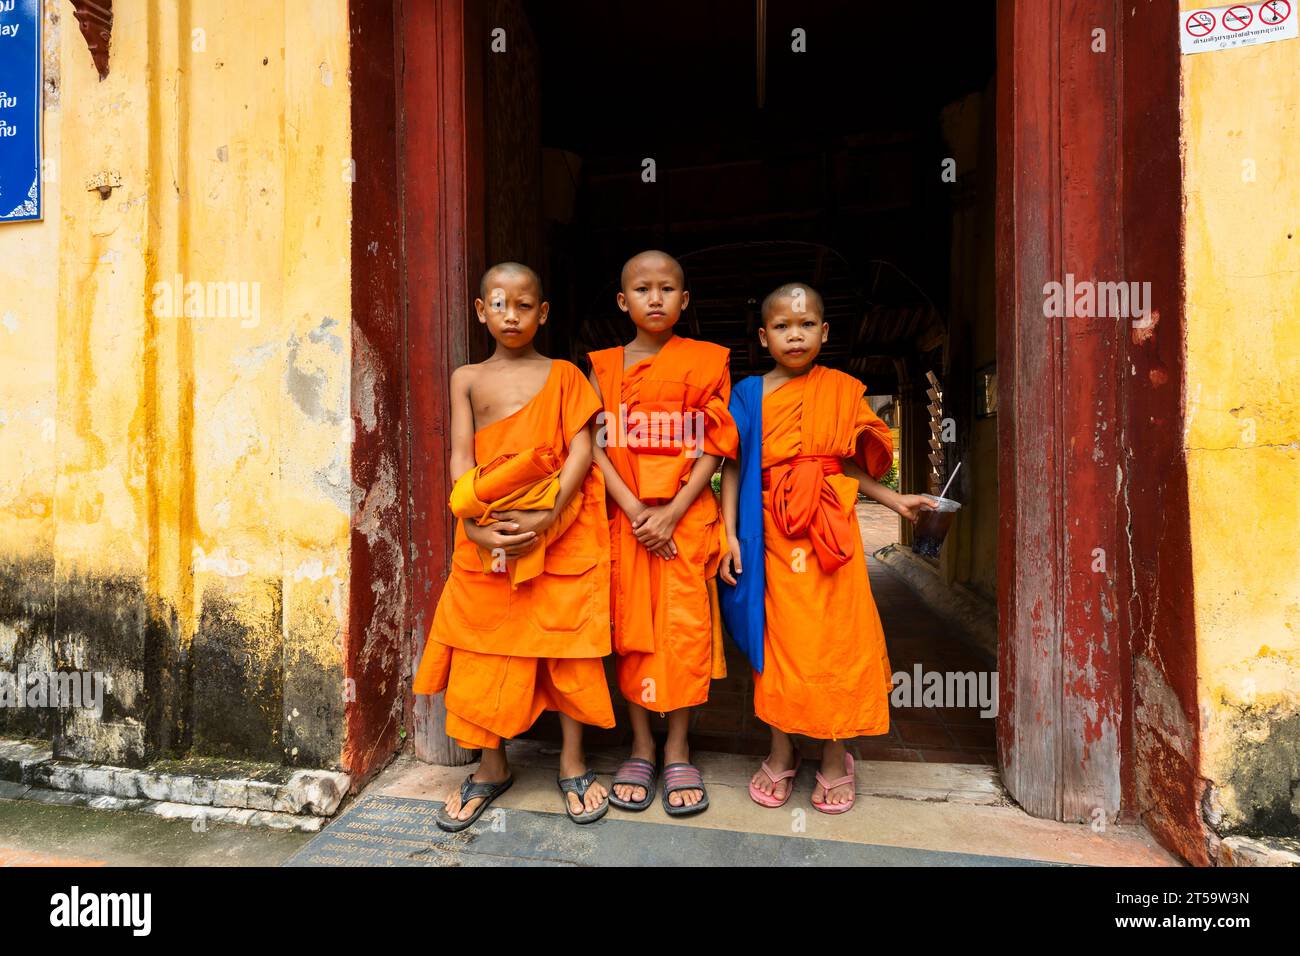 Little monks with orange robes at gate, Wat Si Saket(Wat Sisaket), Vientiane, Laos, Southeast Asia, Asia Stock Photo